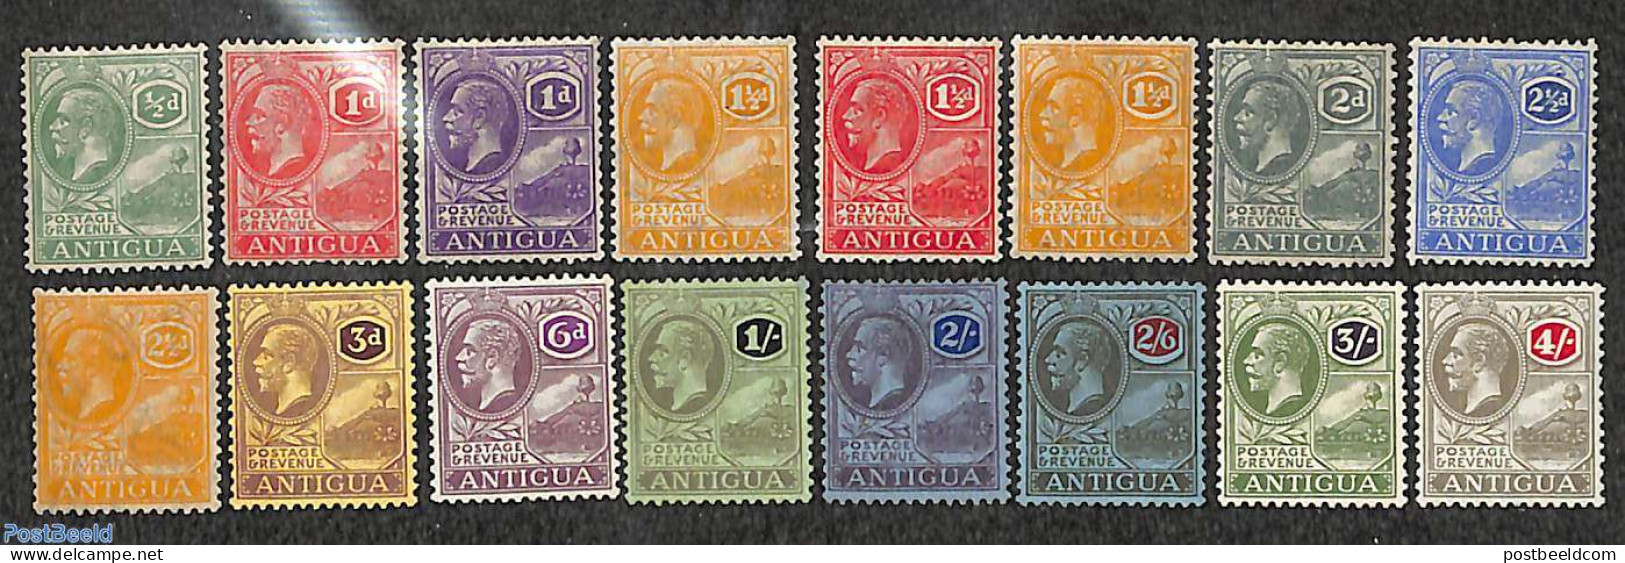 Antigua & Barbuda 1921 Definitives 16v, Unused (hinged) - Antigua Und Barbuda (1981-...)